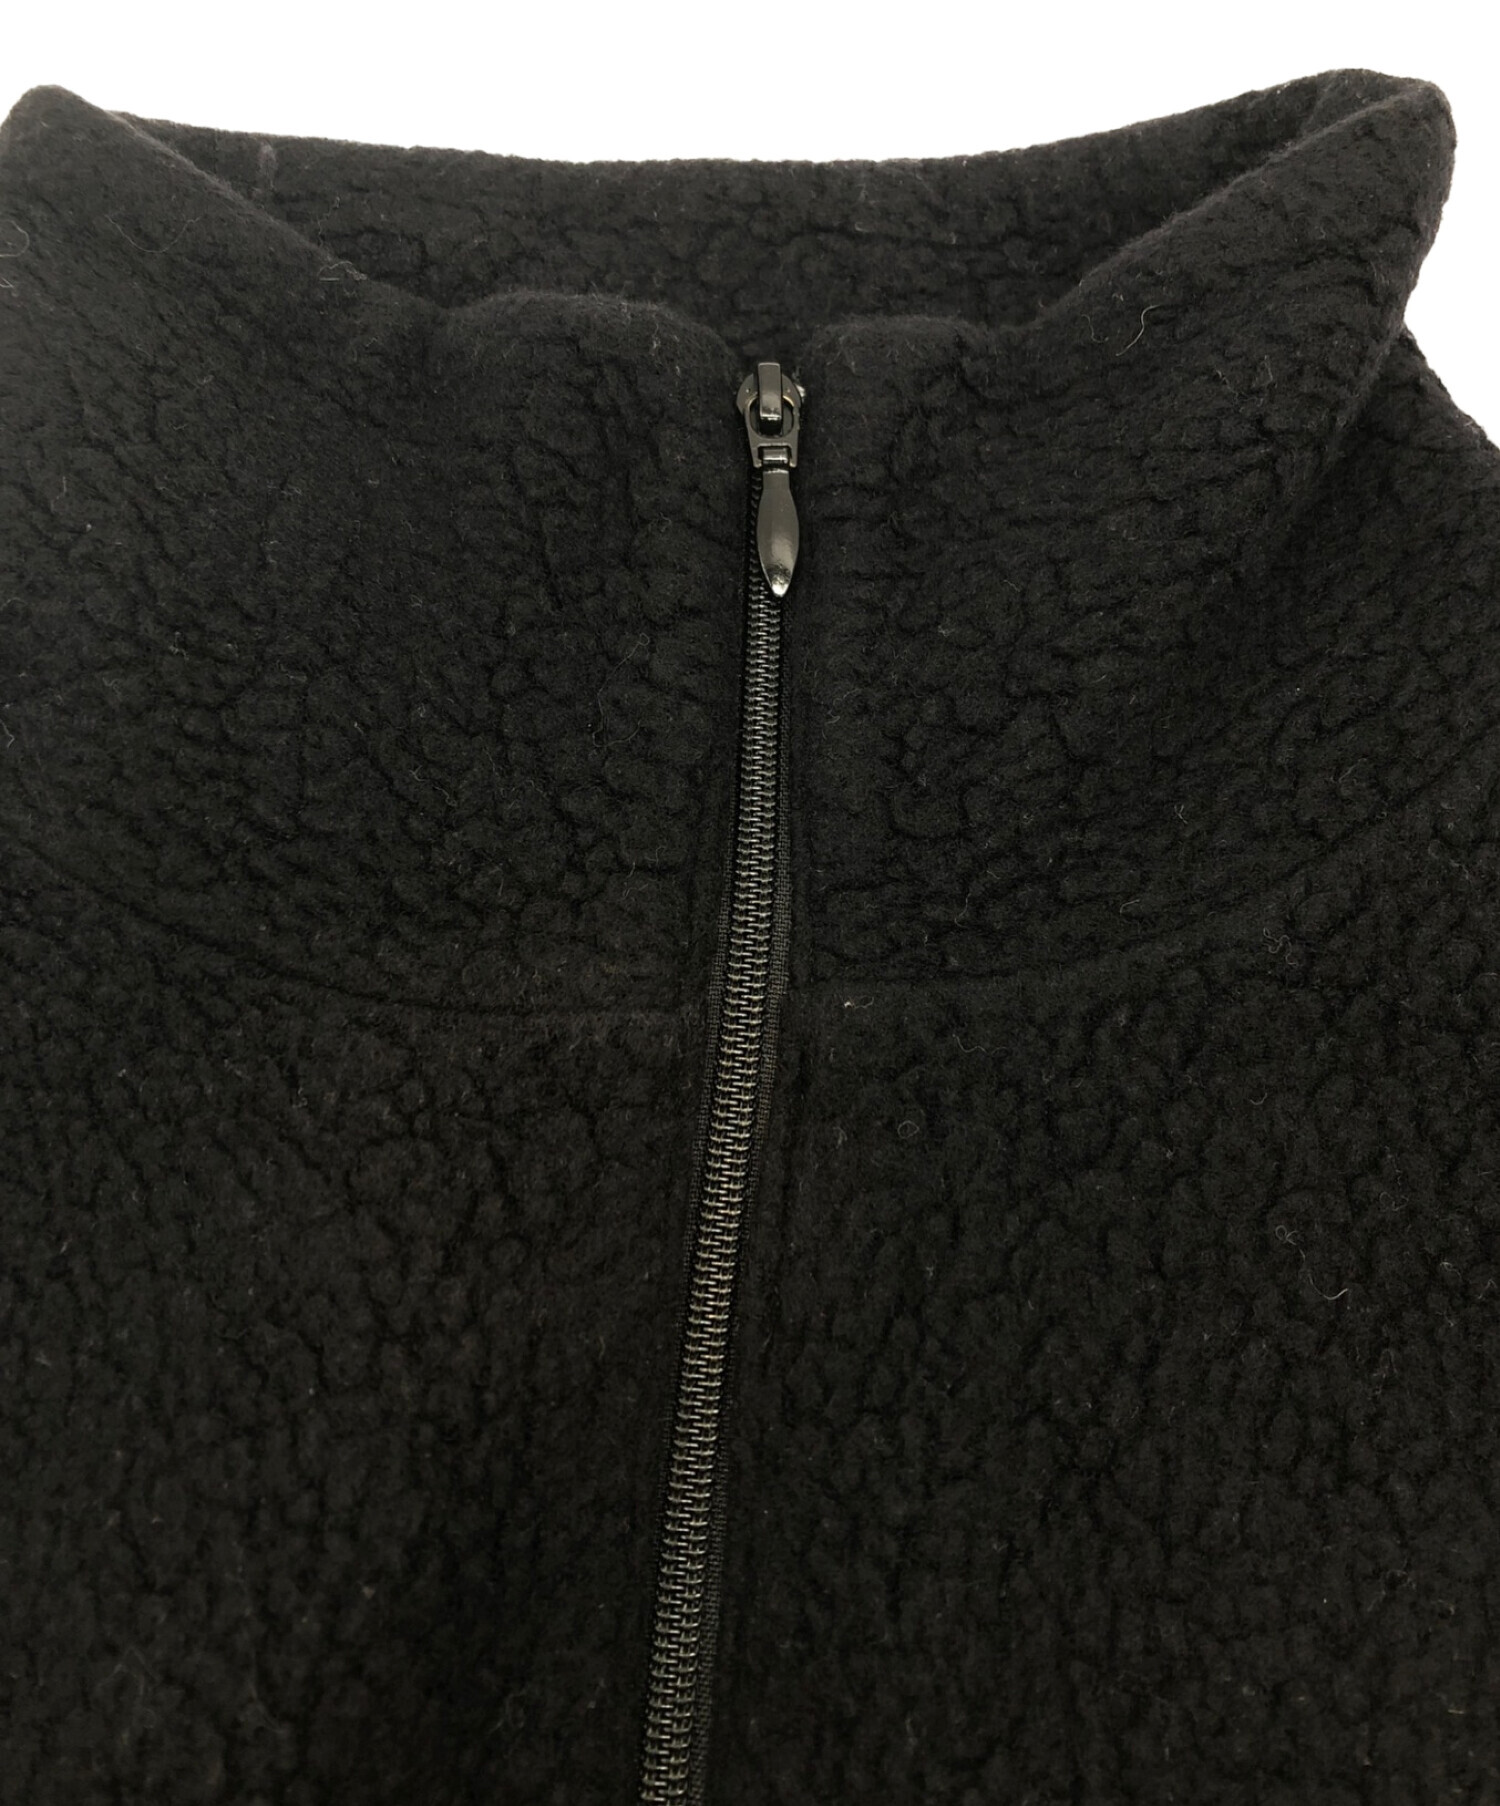 comoli (コモリ) ウールフリースジップアップジャケット ブラック サイズ:2